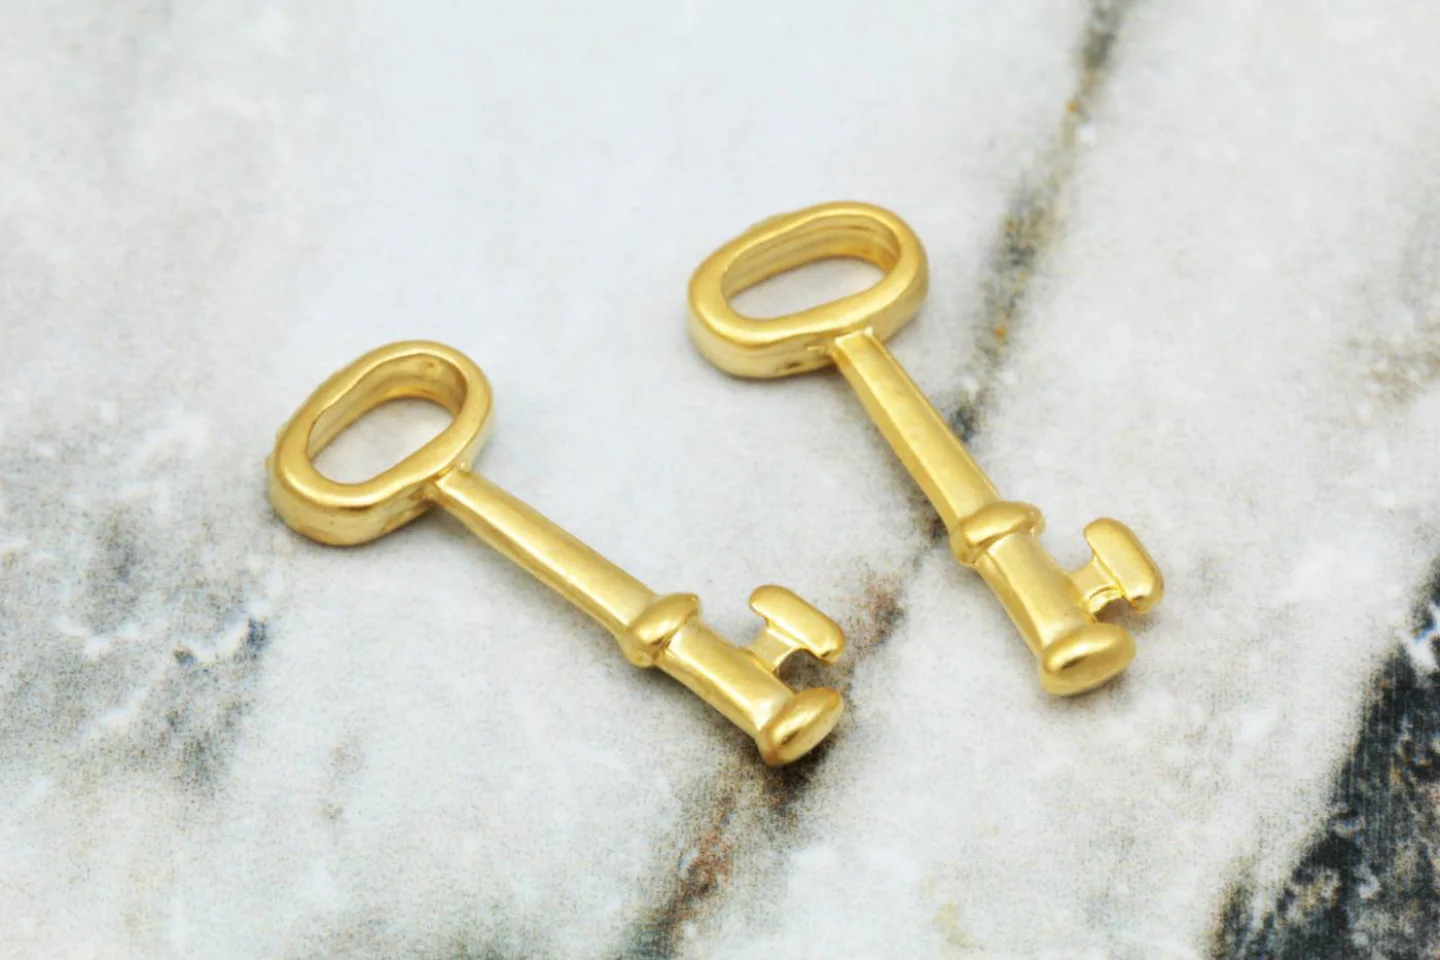 gold-plated-metal-key-jewelry-pendants.